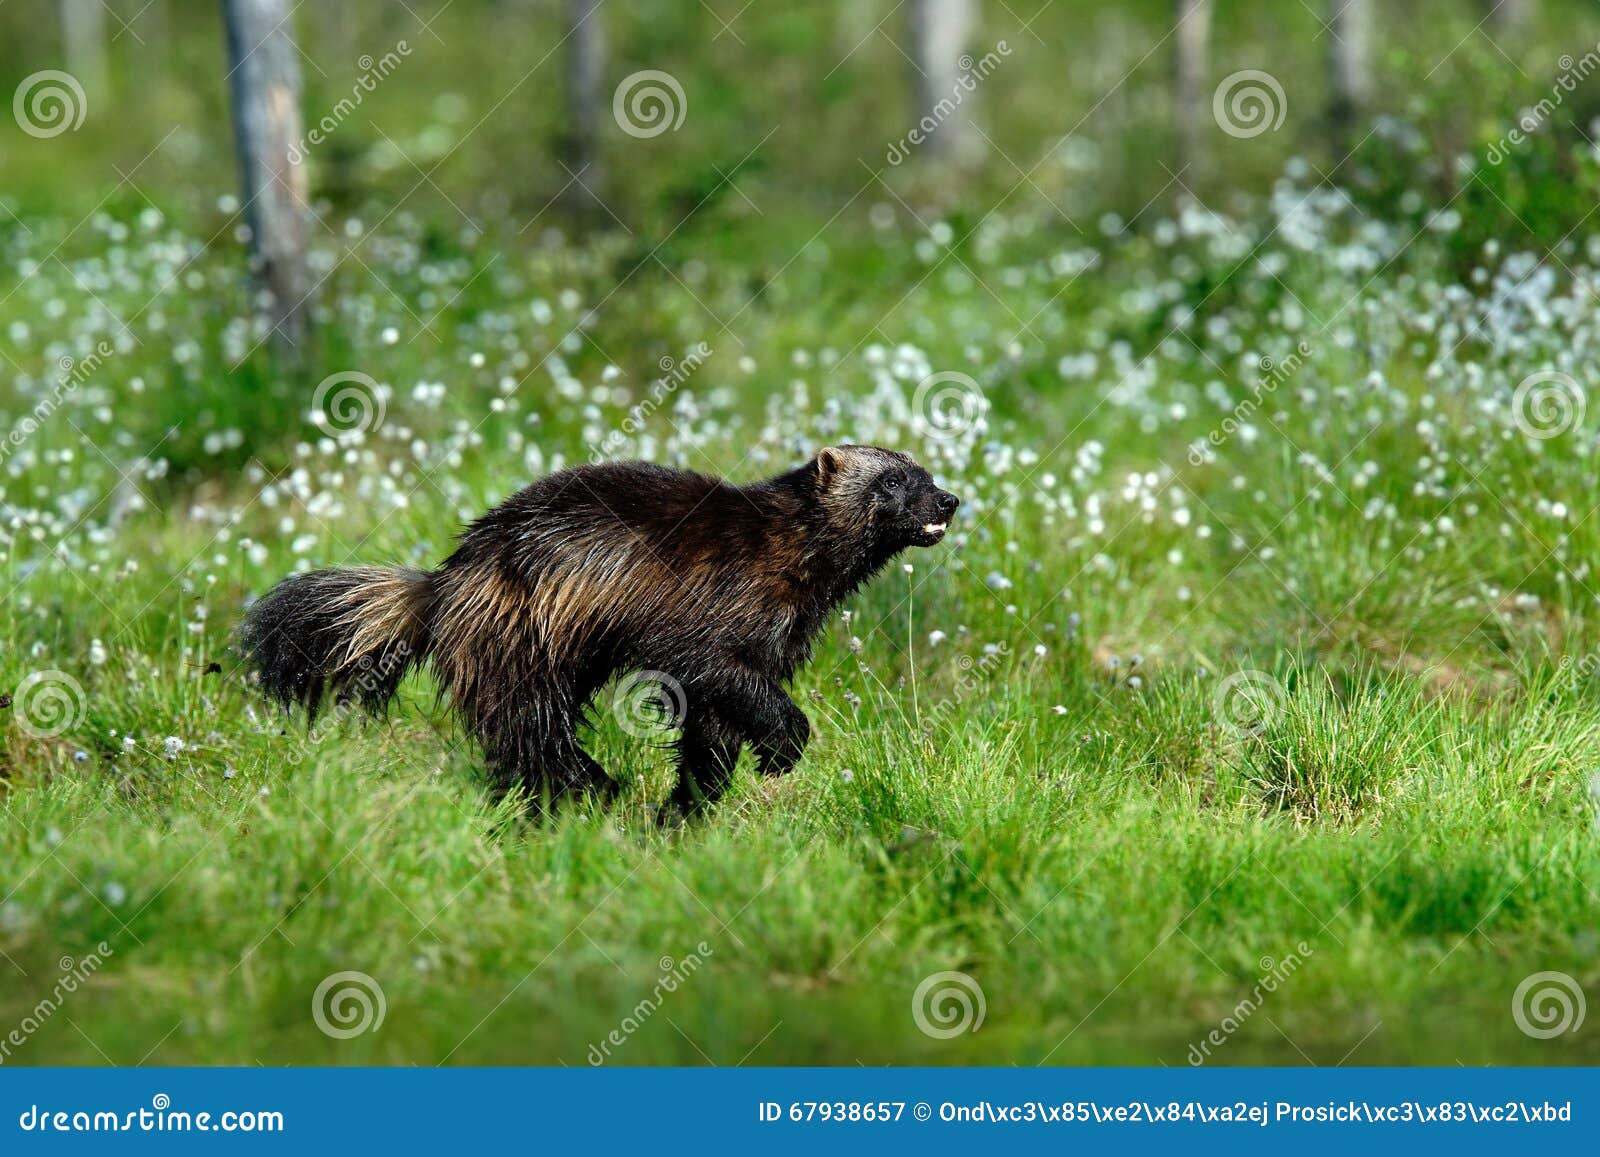 running tenacious wolverine in finland tajga